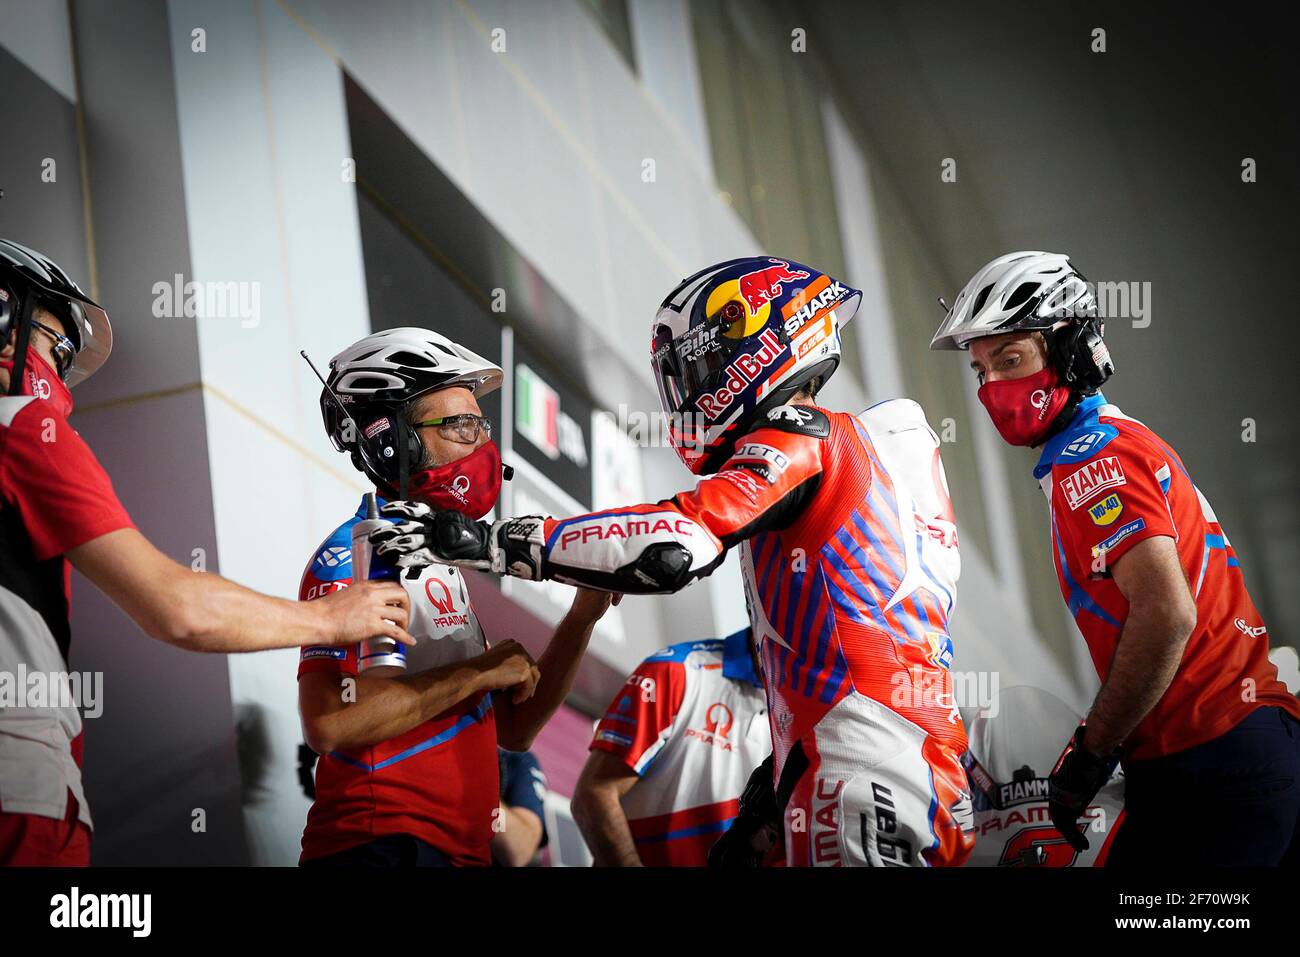 Qualifying for MotoGP TISSOT Grand Prix of Doha underway at Losail  International Circuit, Qatar. April 3, 2021 In picture: Jorge Martín  Clasificacion del Gran Premio de MotoGP TISSOT de Doha en el